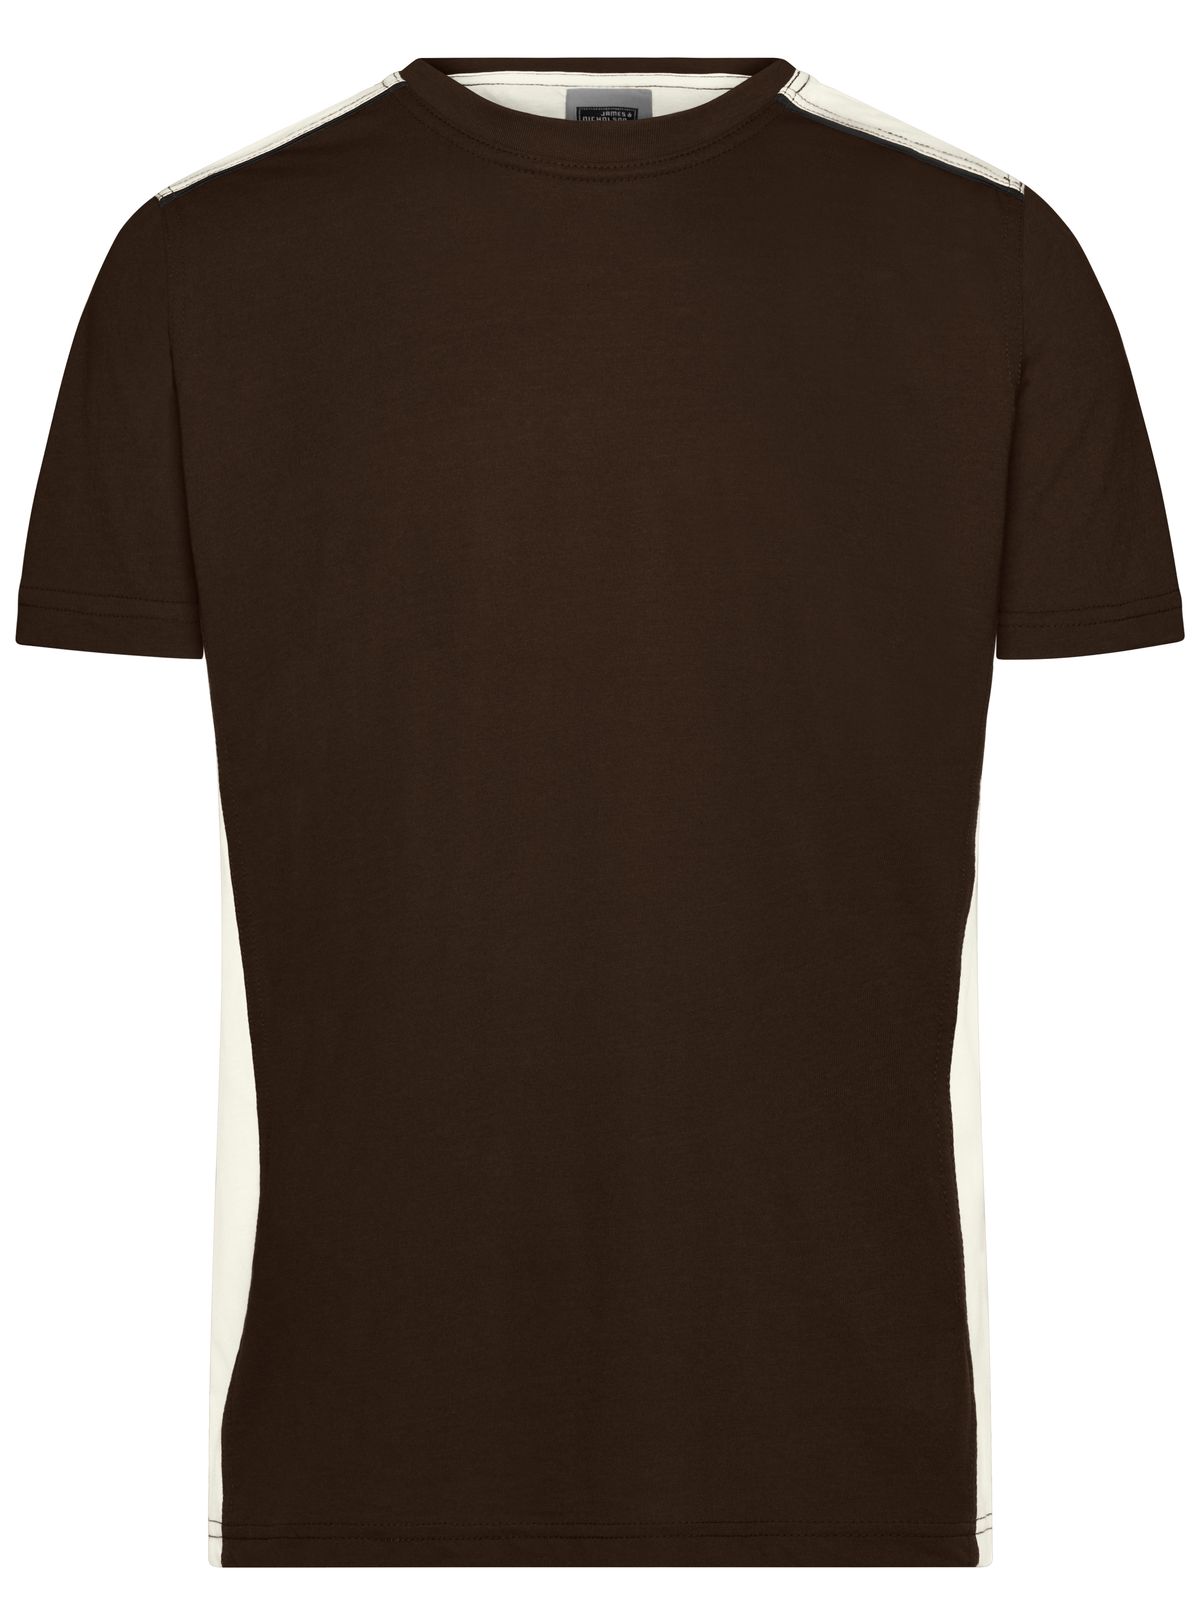 mens-workwear-t-shirt-color-brown-stone.webp